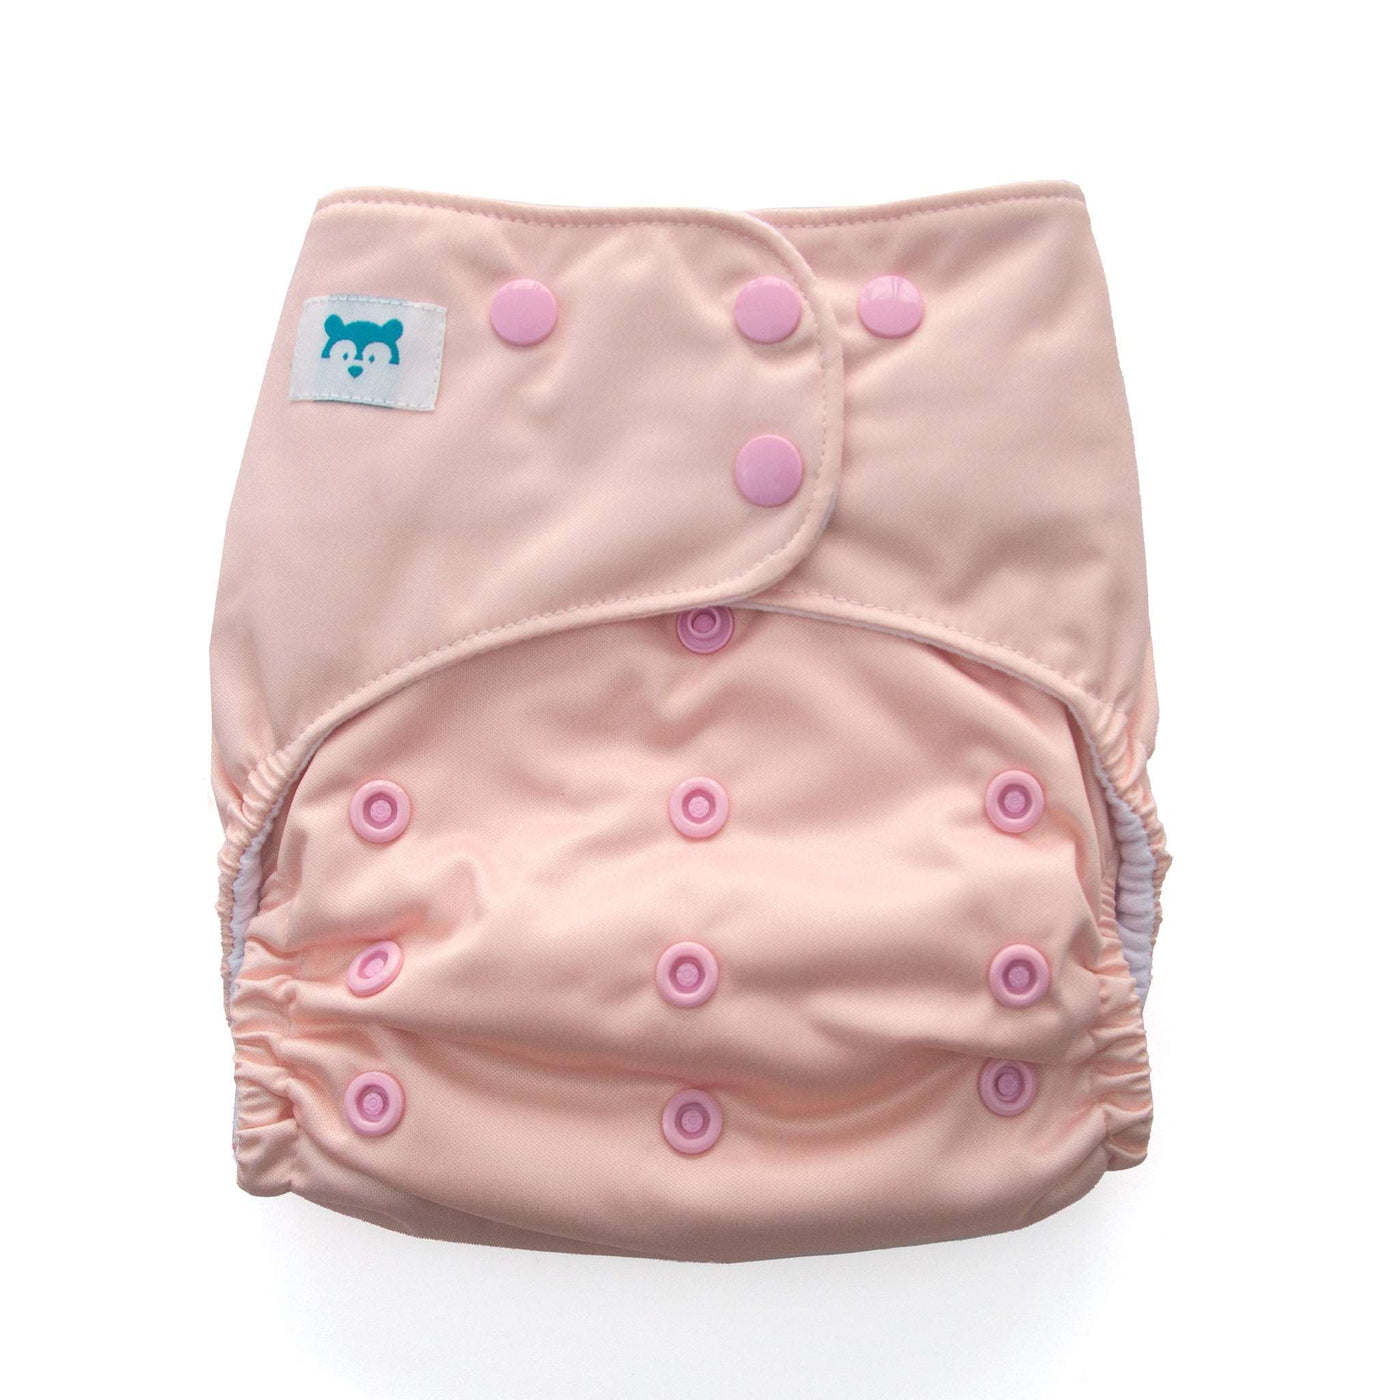 Cloth nappy soft pink colour